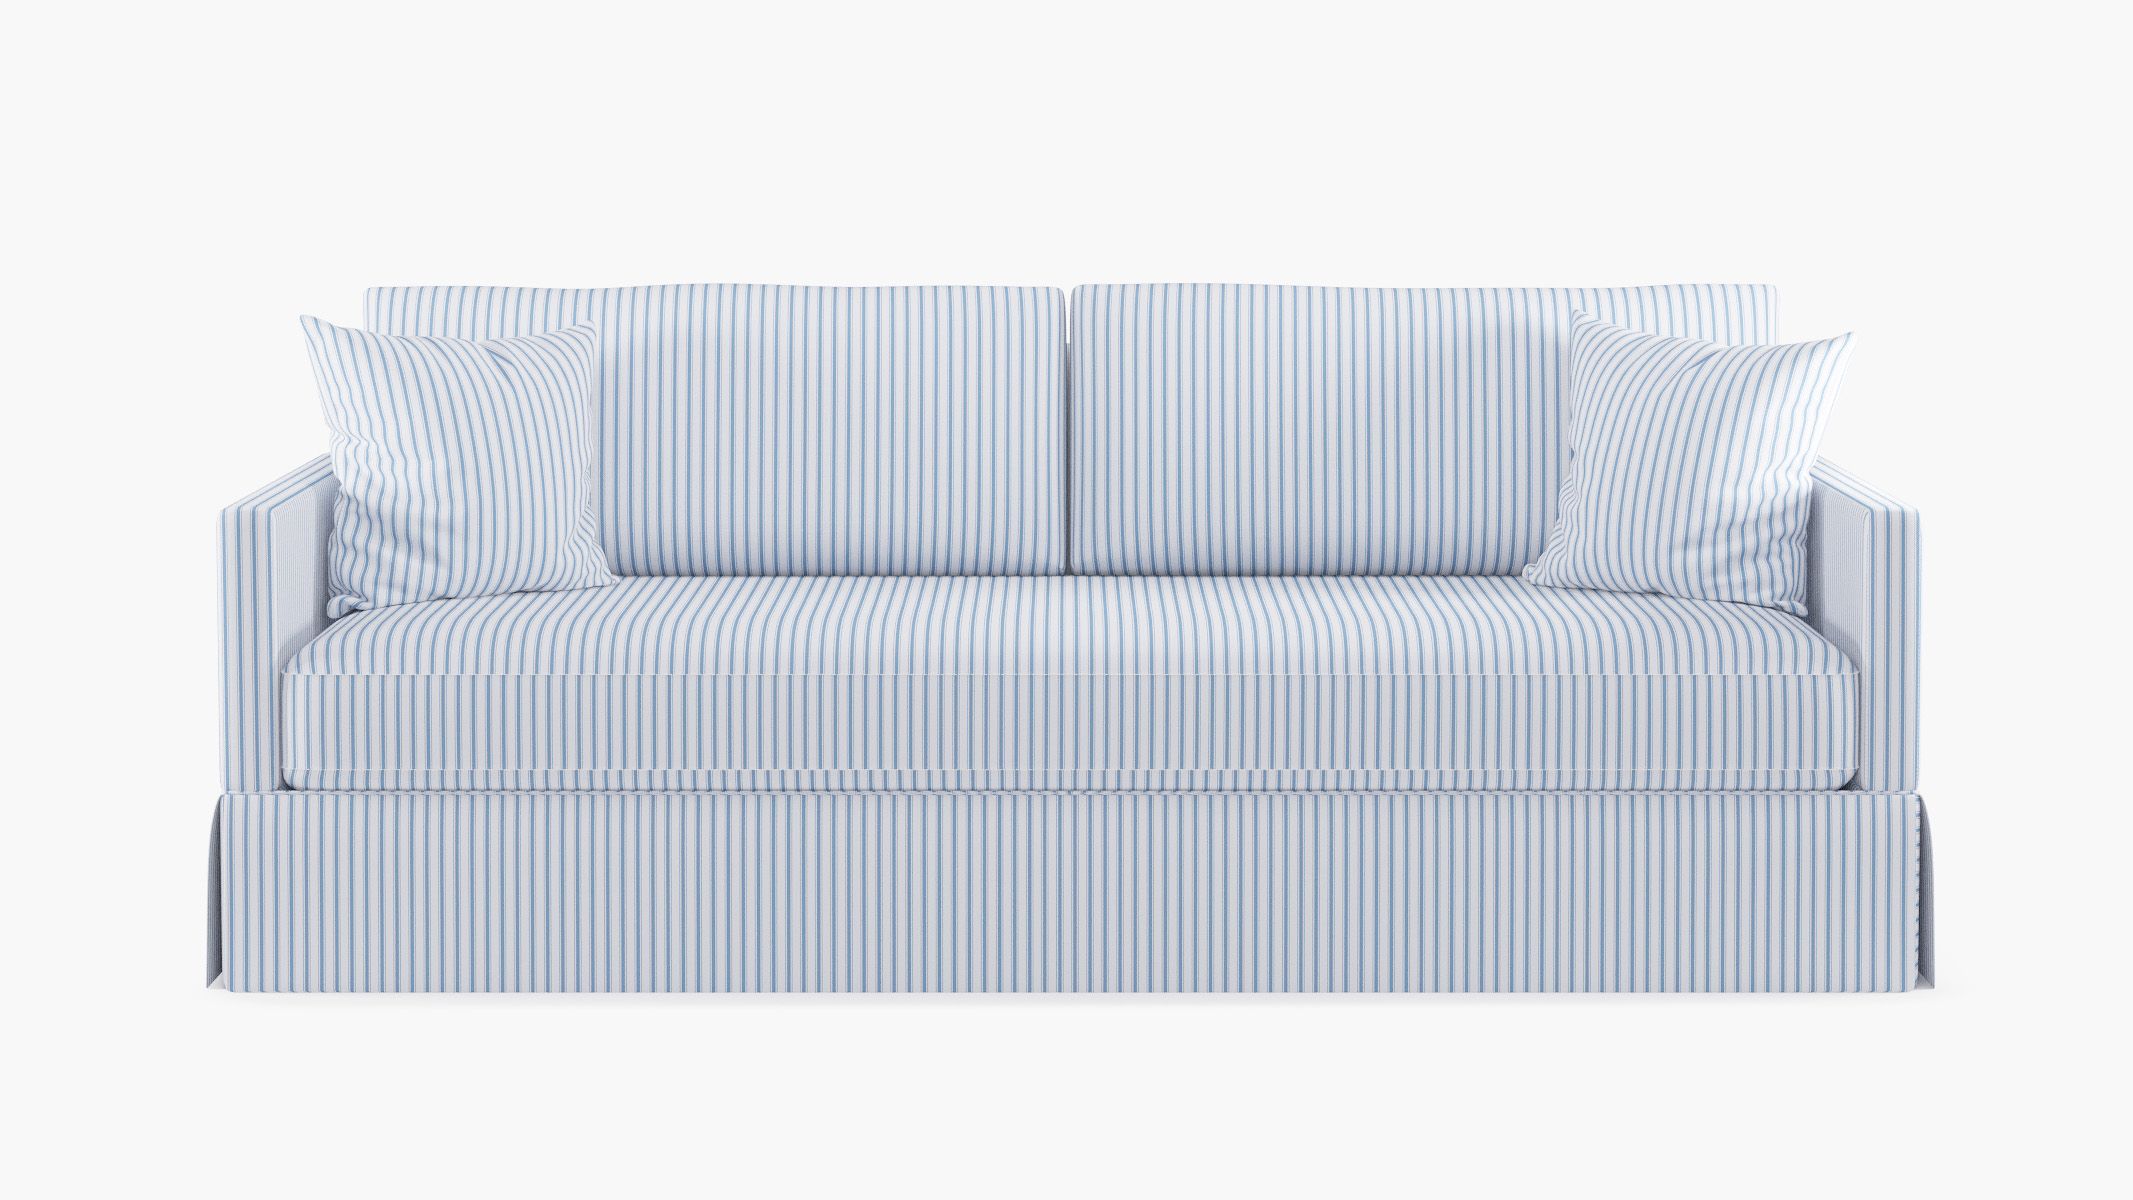 Skirted Sleeper Sofa | The Inside